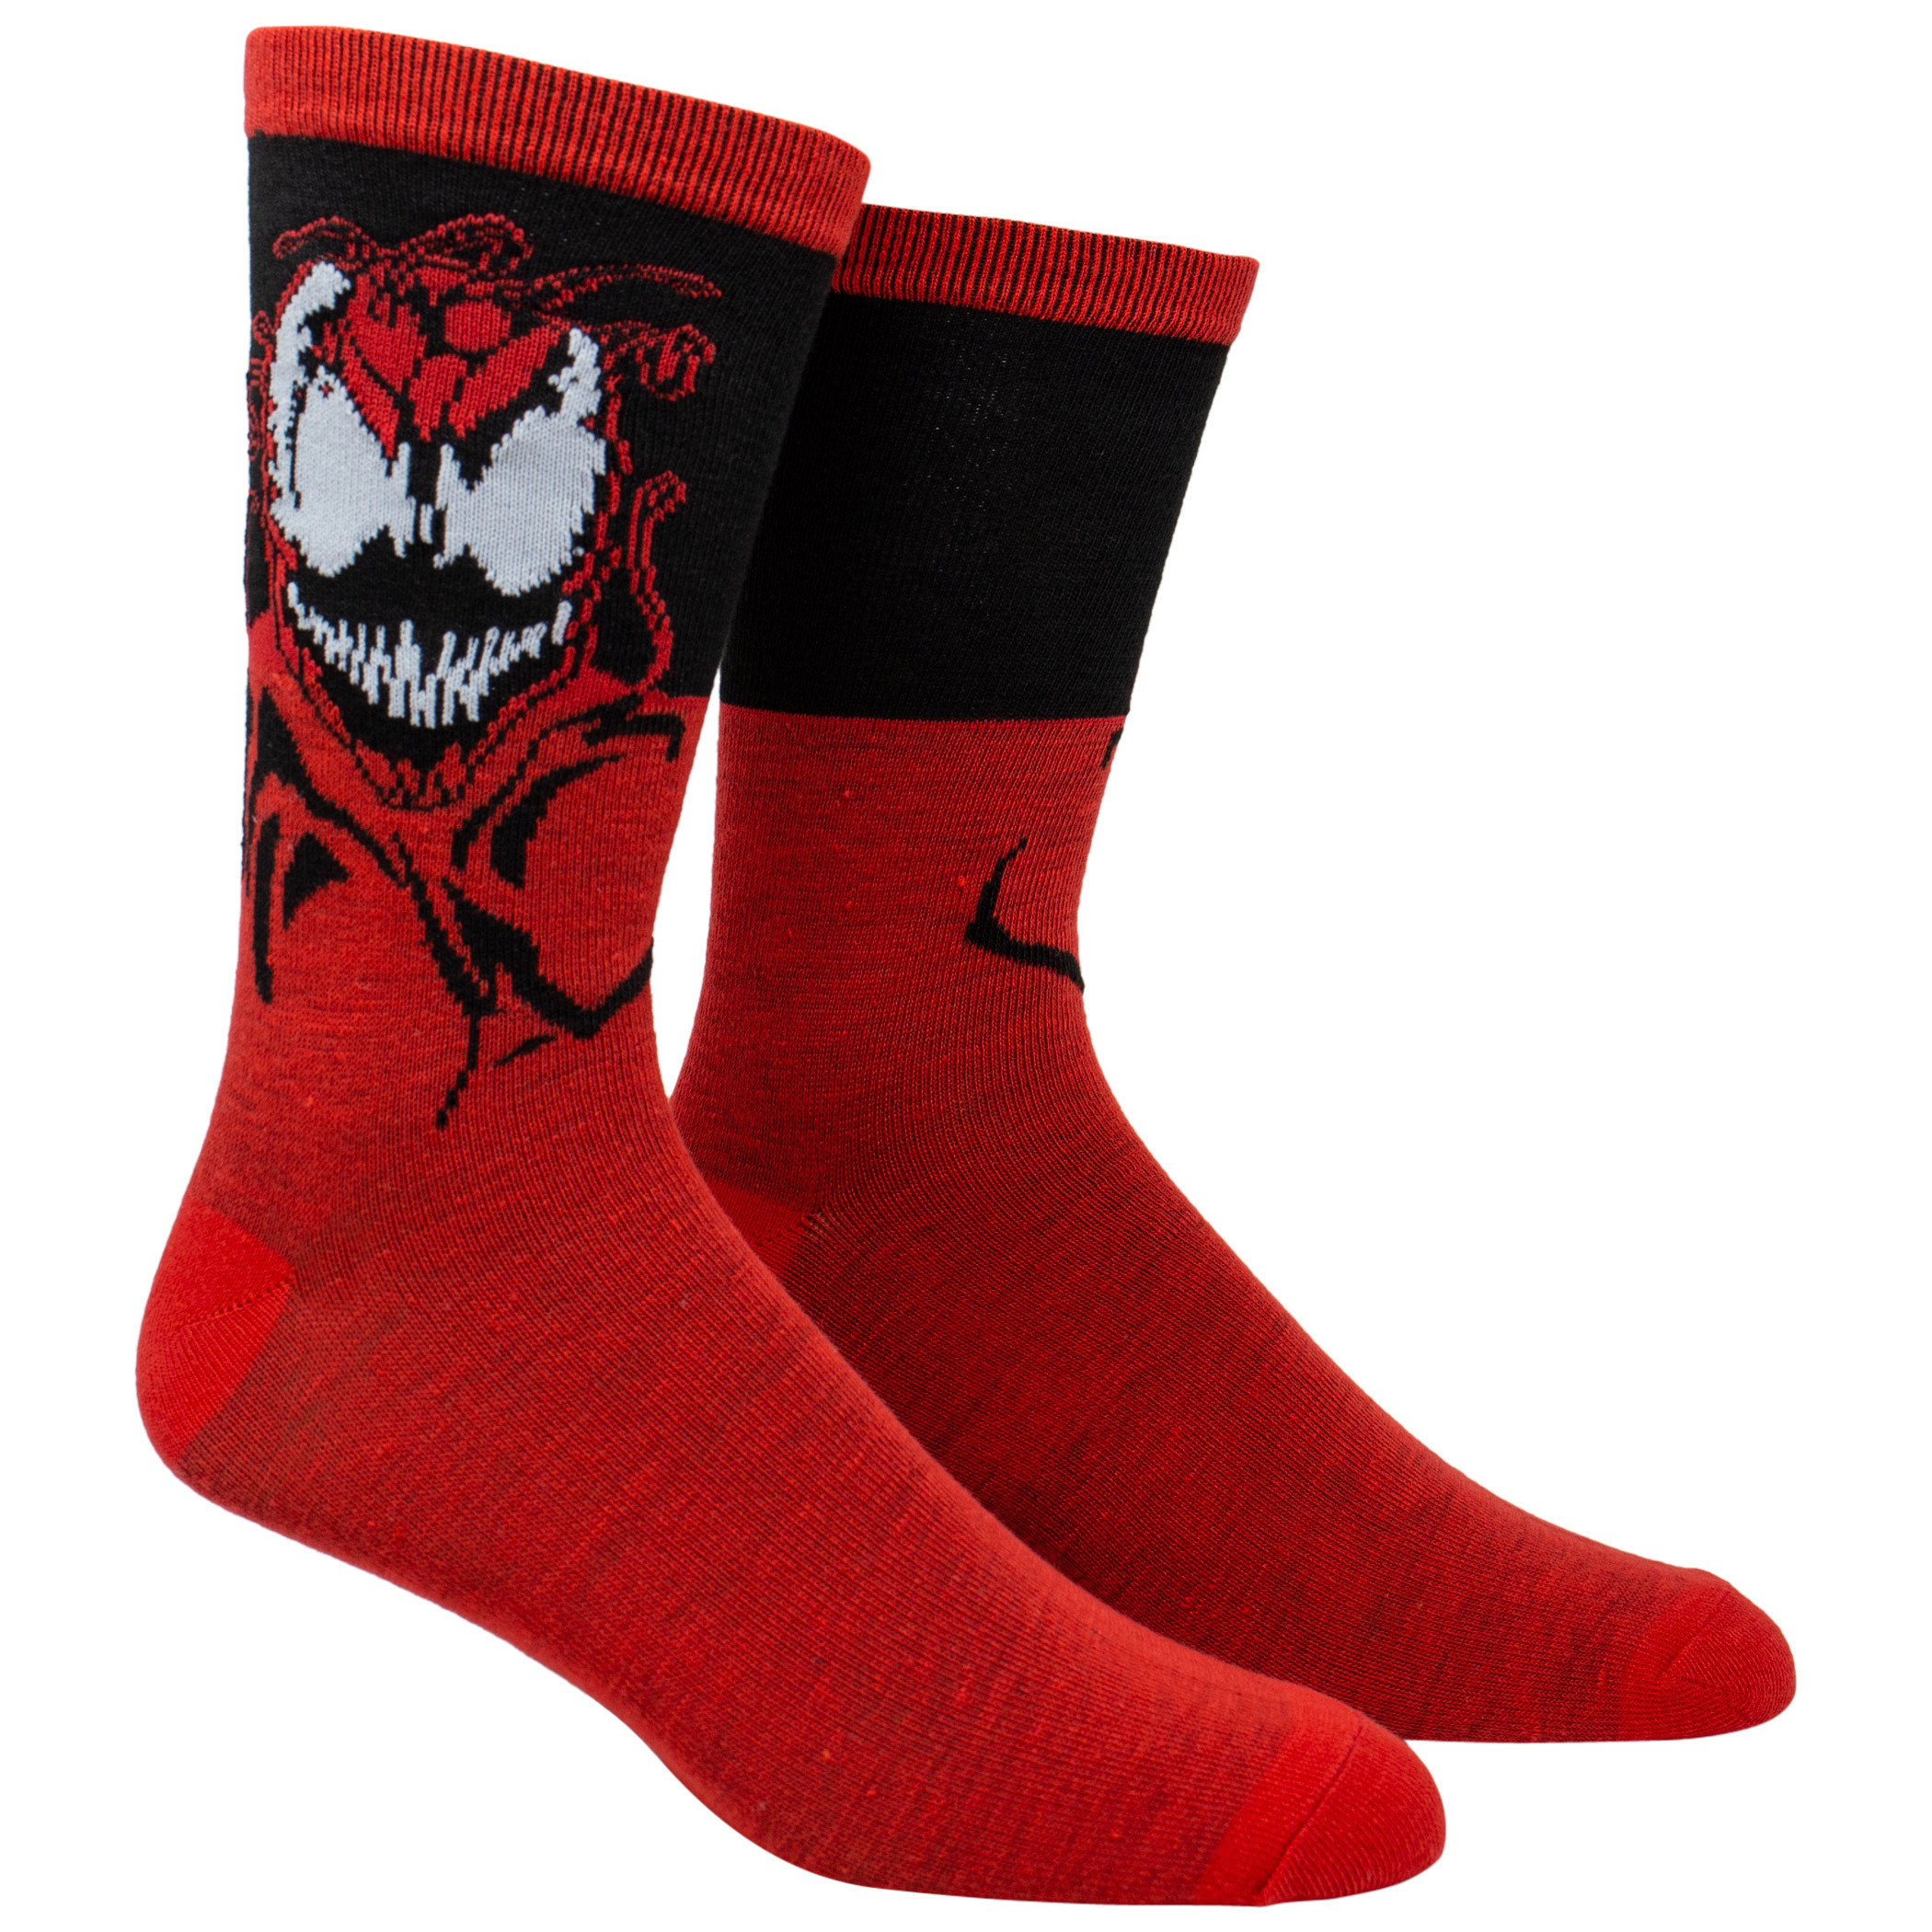 Venom and Carnage Crew Socks 2-Pair Pack